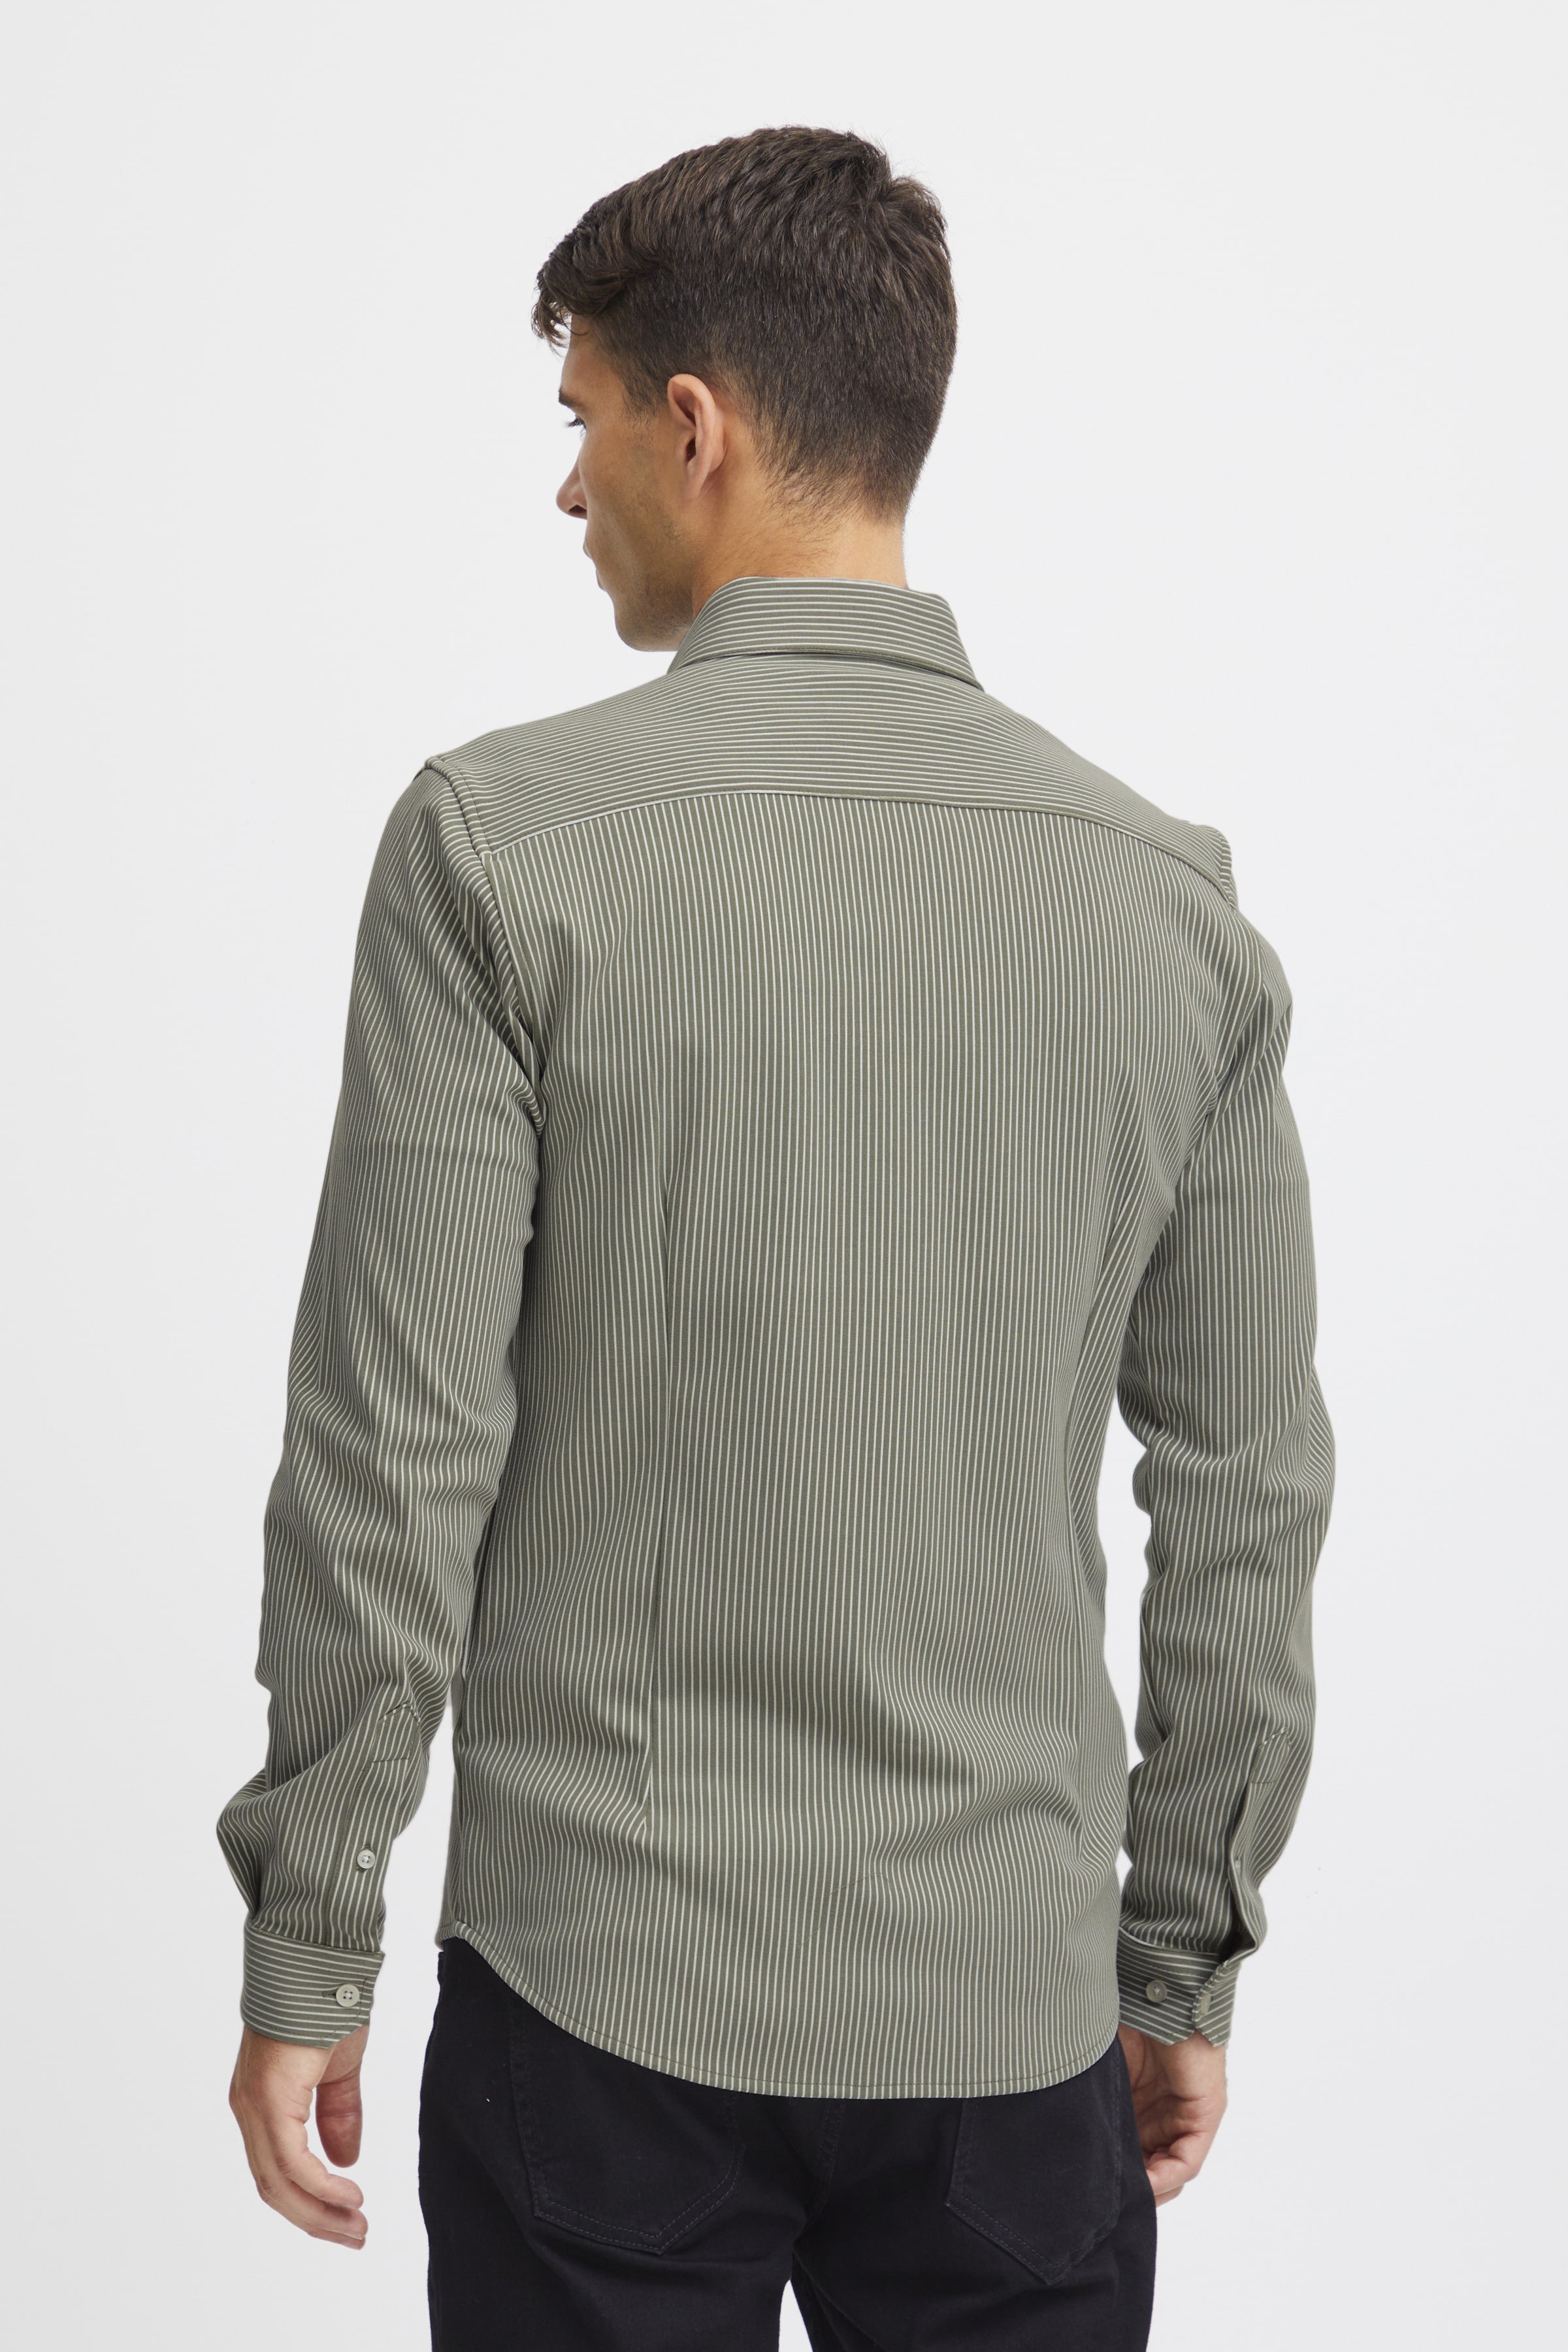 Arthur Striped Shirt Vetiver Green, grøn stribet skjorte til mænd fra Casual Friday. Her set på model bagfra.